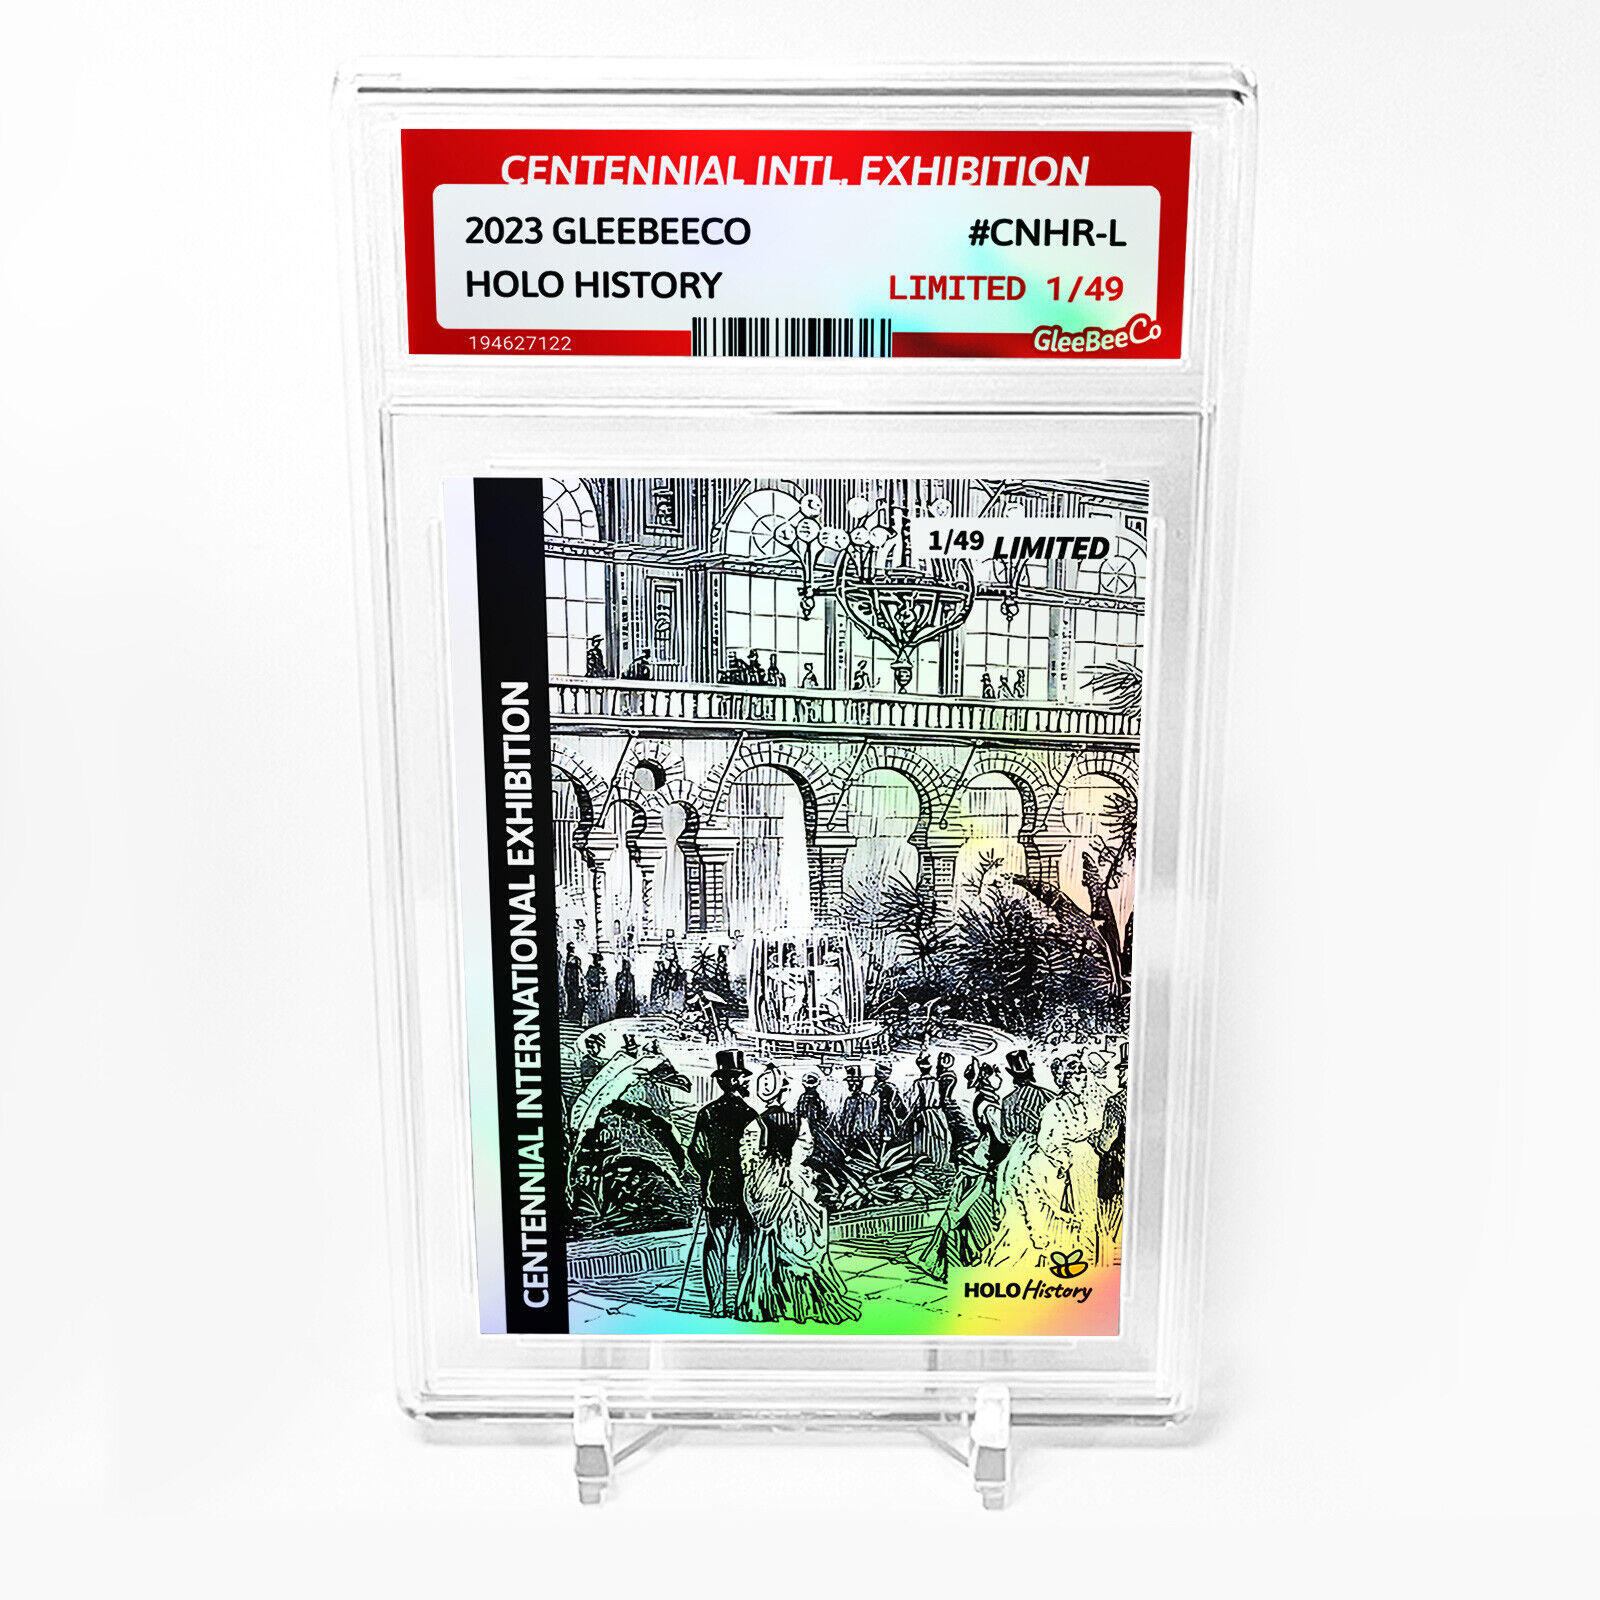 CENTENNIAL INTERNATIONAL EXHIBITION Card GleeBeeCo #CNHR-L - Limited Edition /49